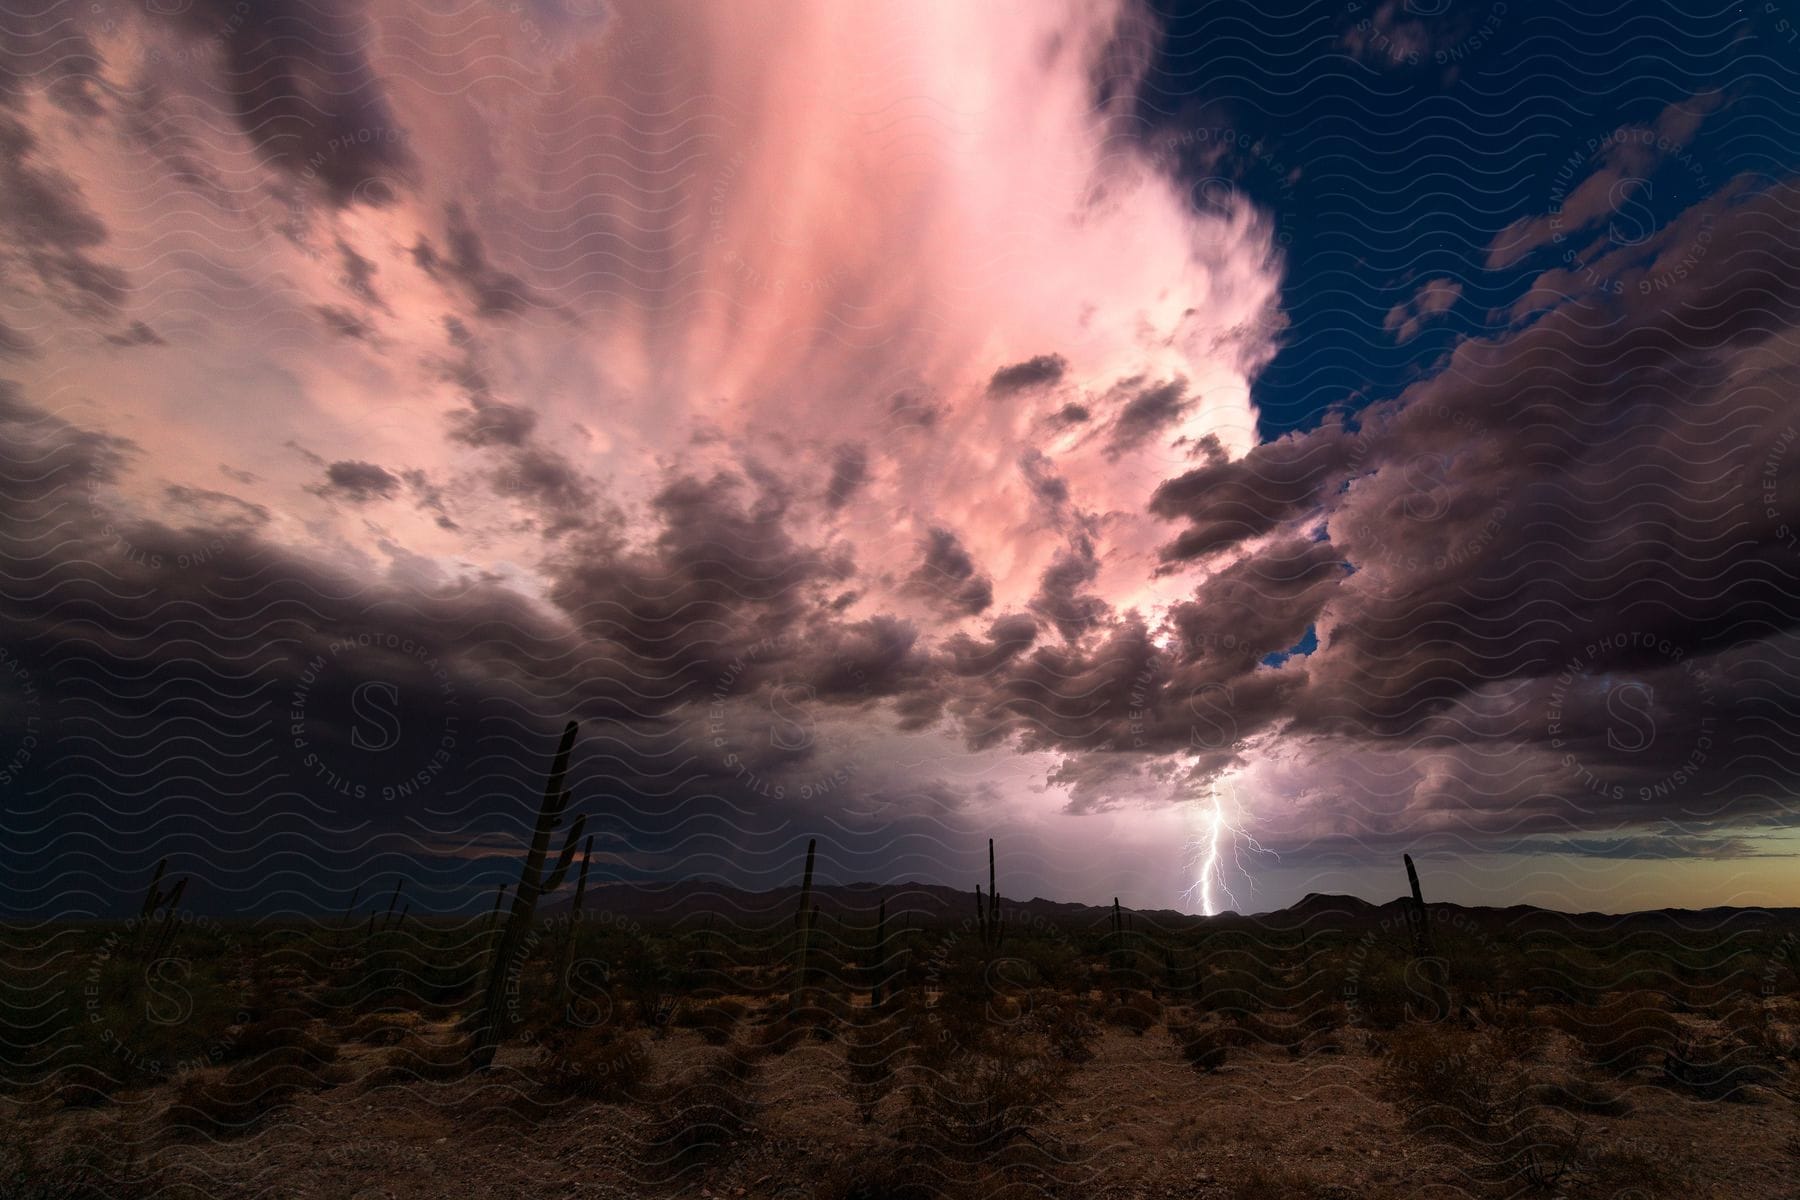 Lightning illuminates the desert landscape at dusk as the sun sets over cacti and strikes the distant terrain